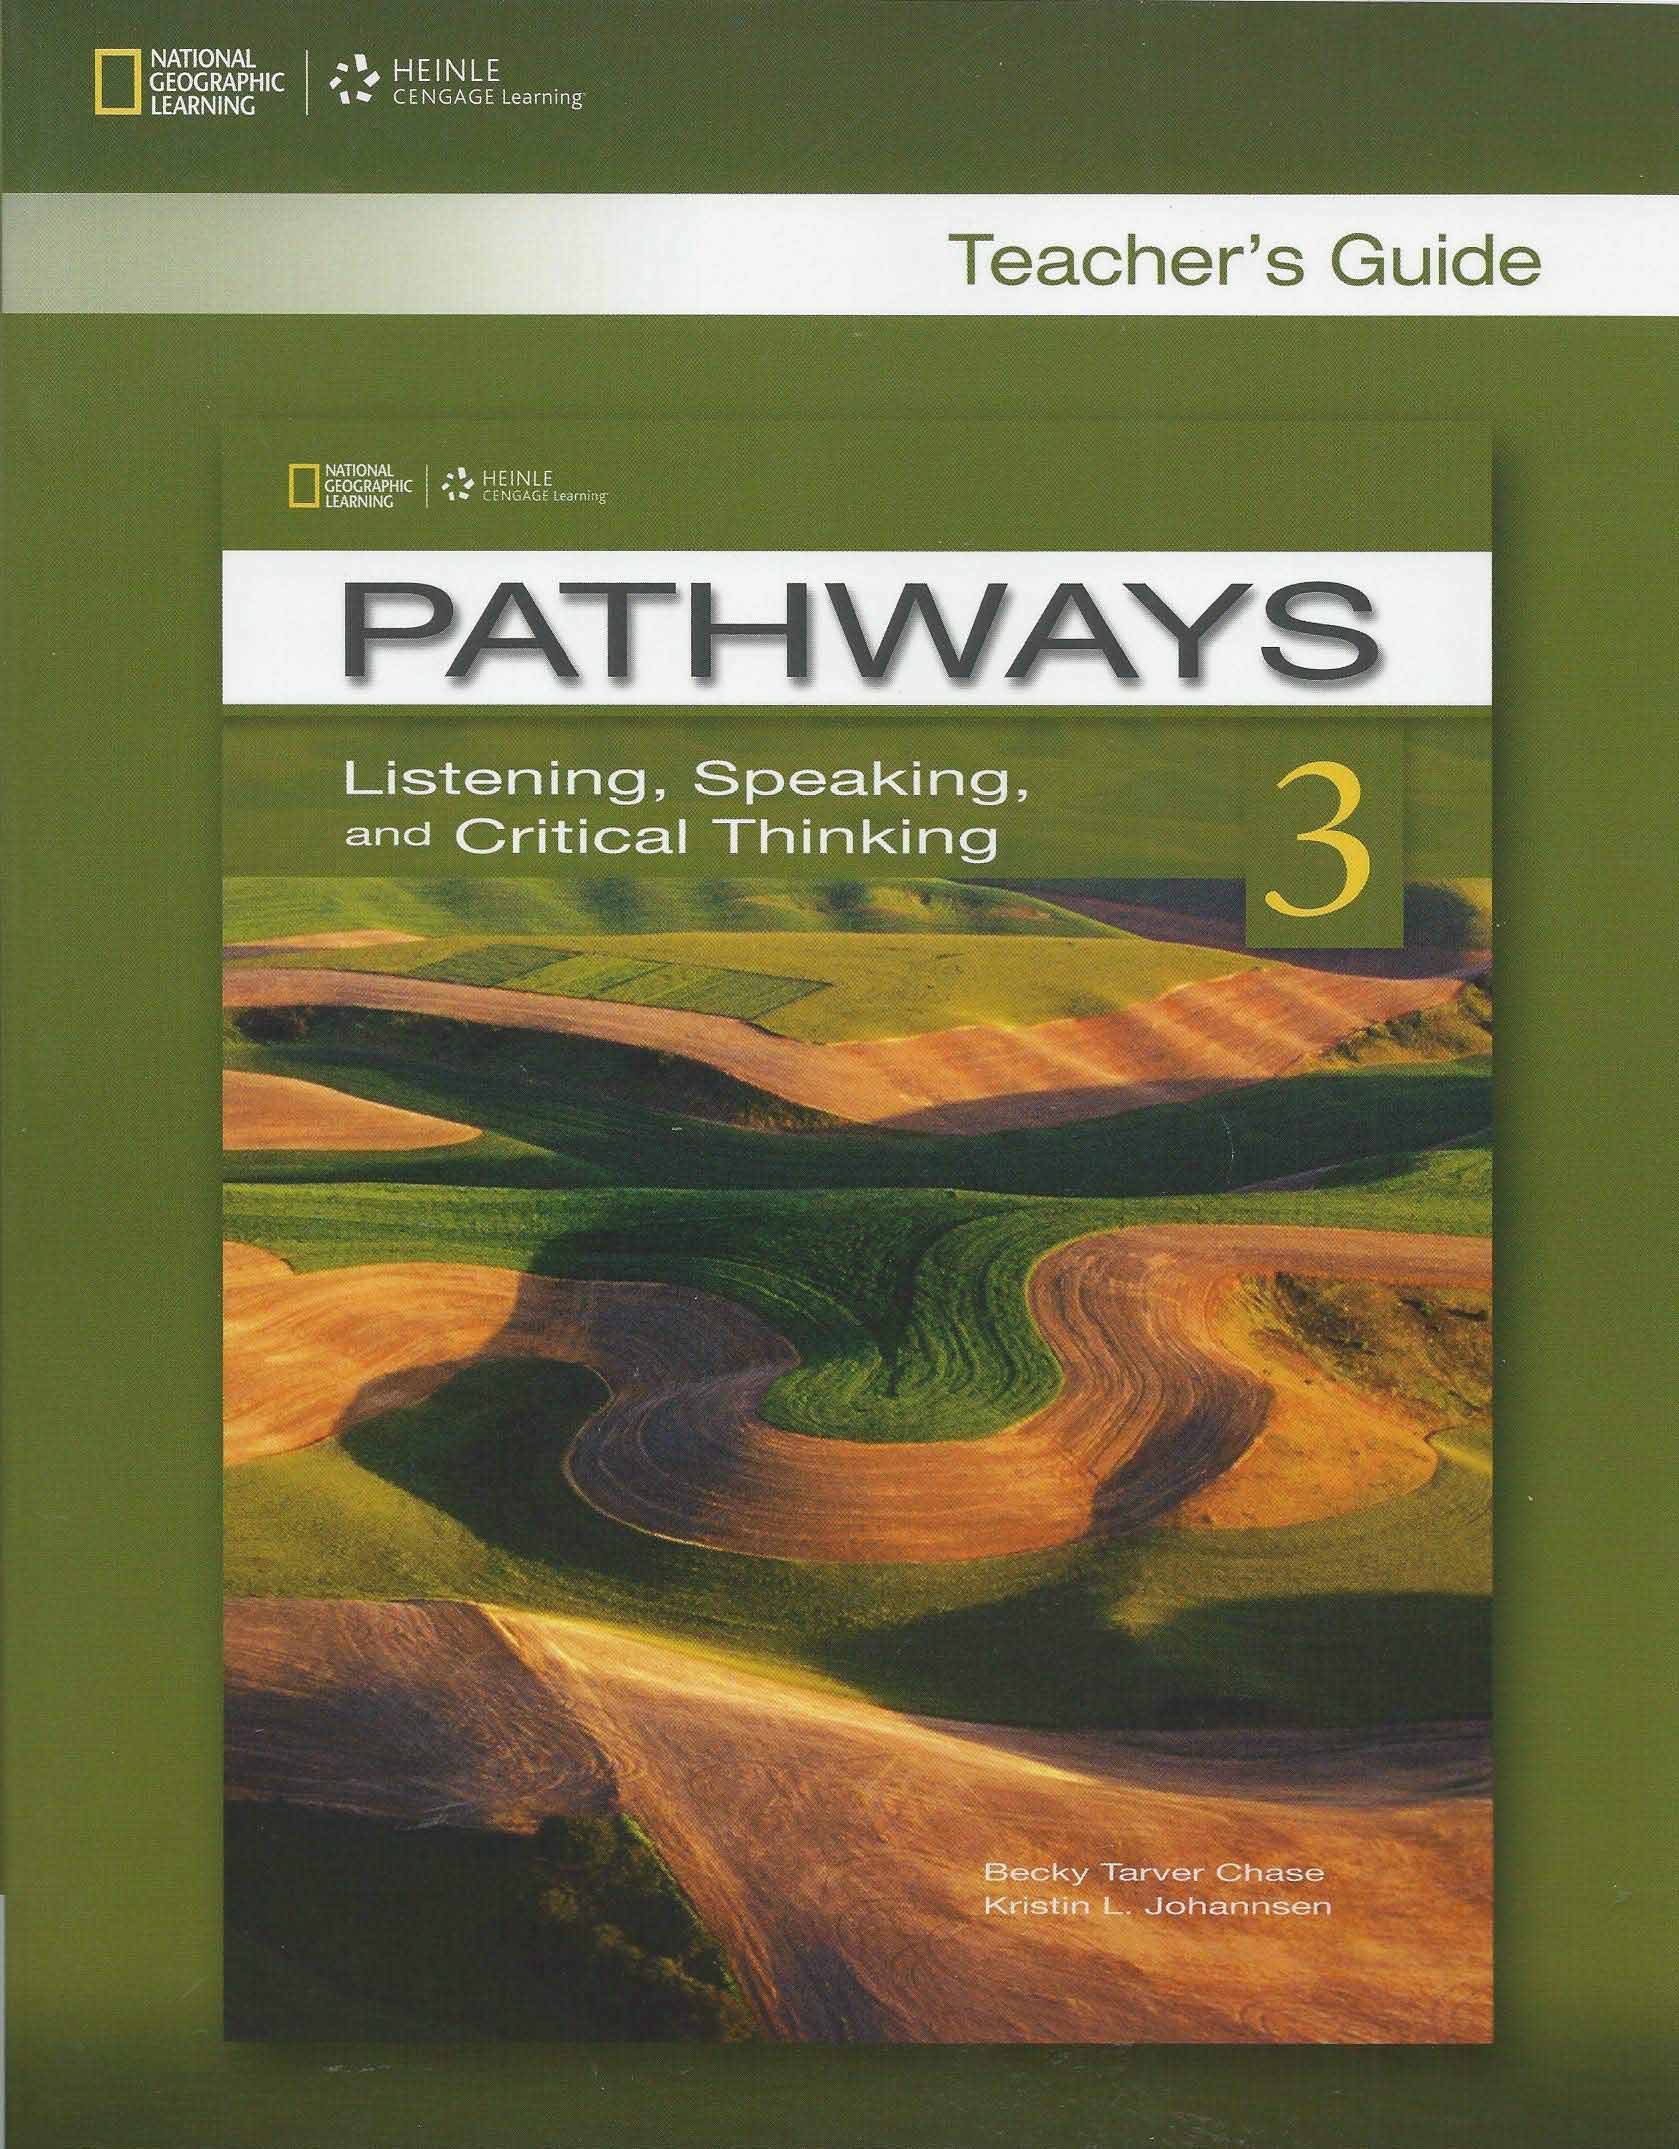 pathways 3 reading writing and critical thinking key